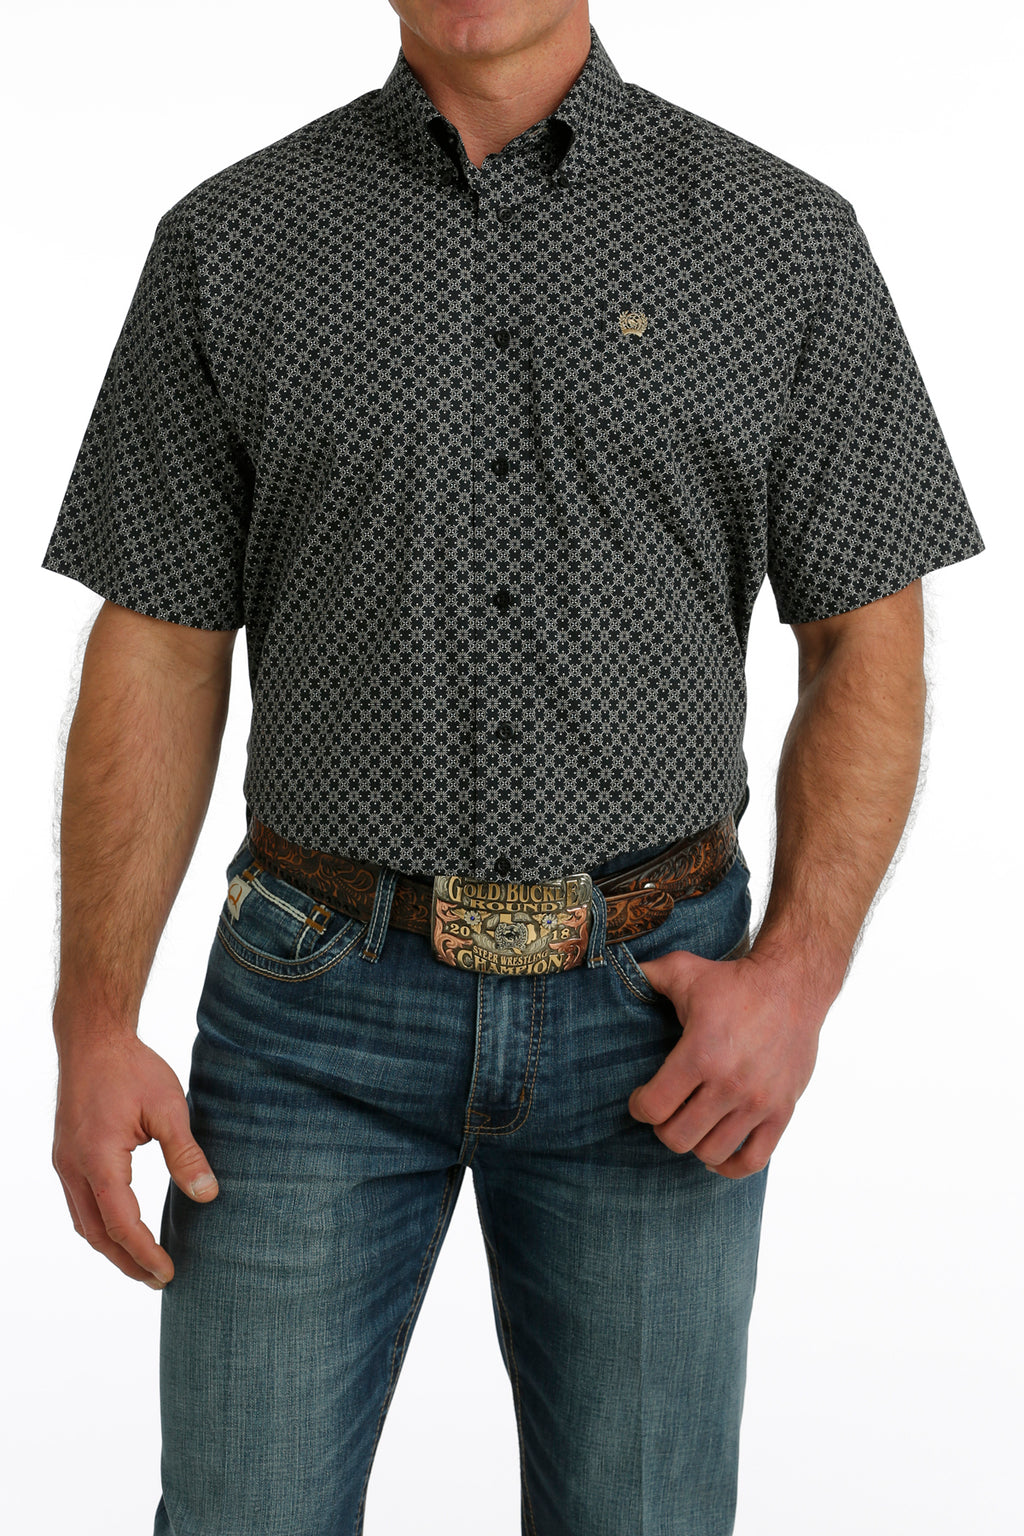 CINCH Men's Plaid Short Sleeve Button-Down Western Shirt